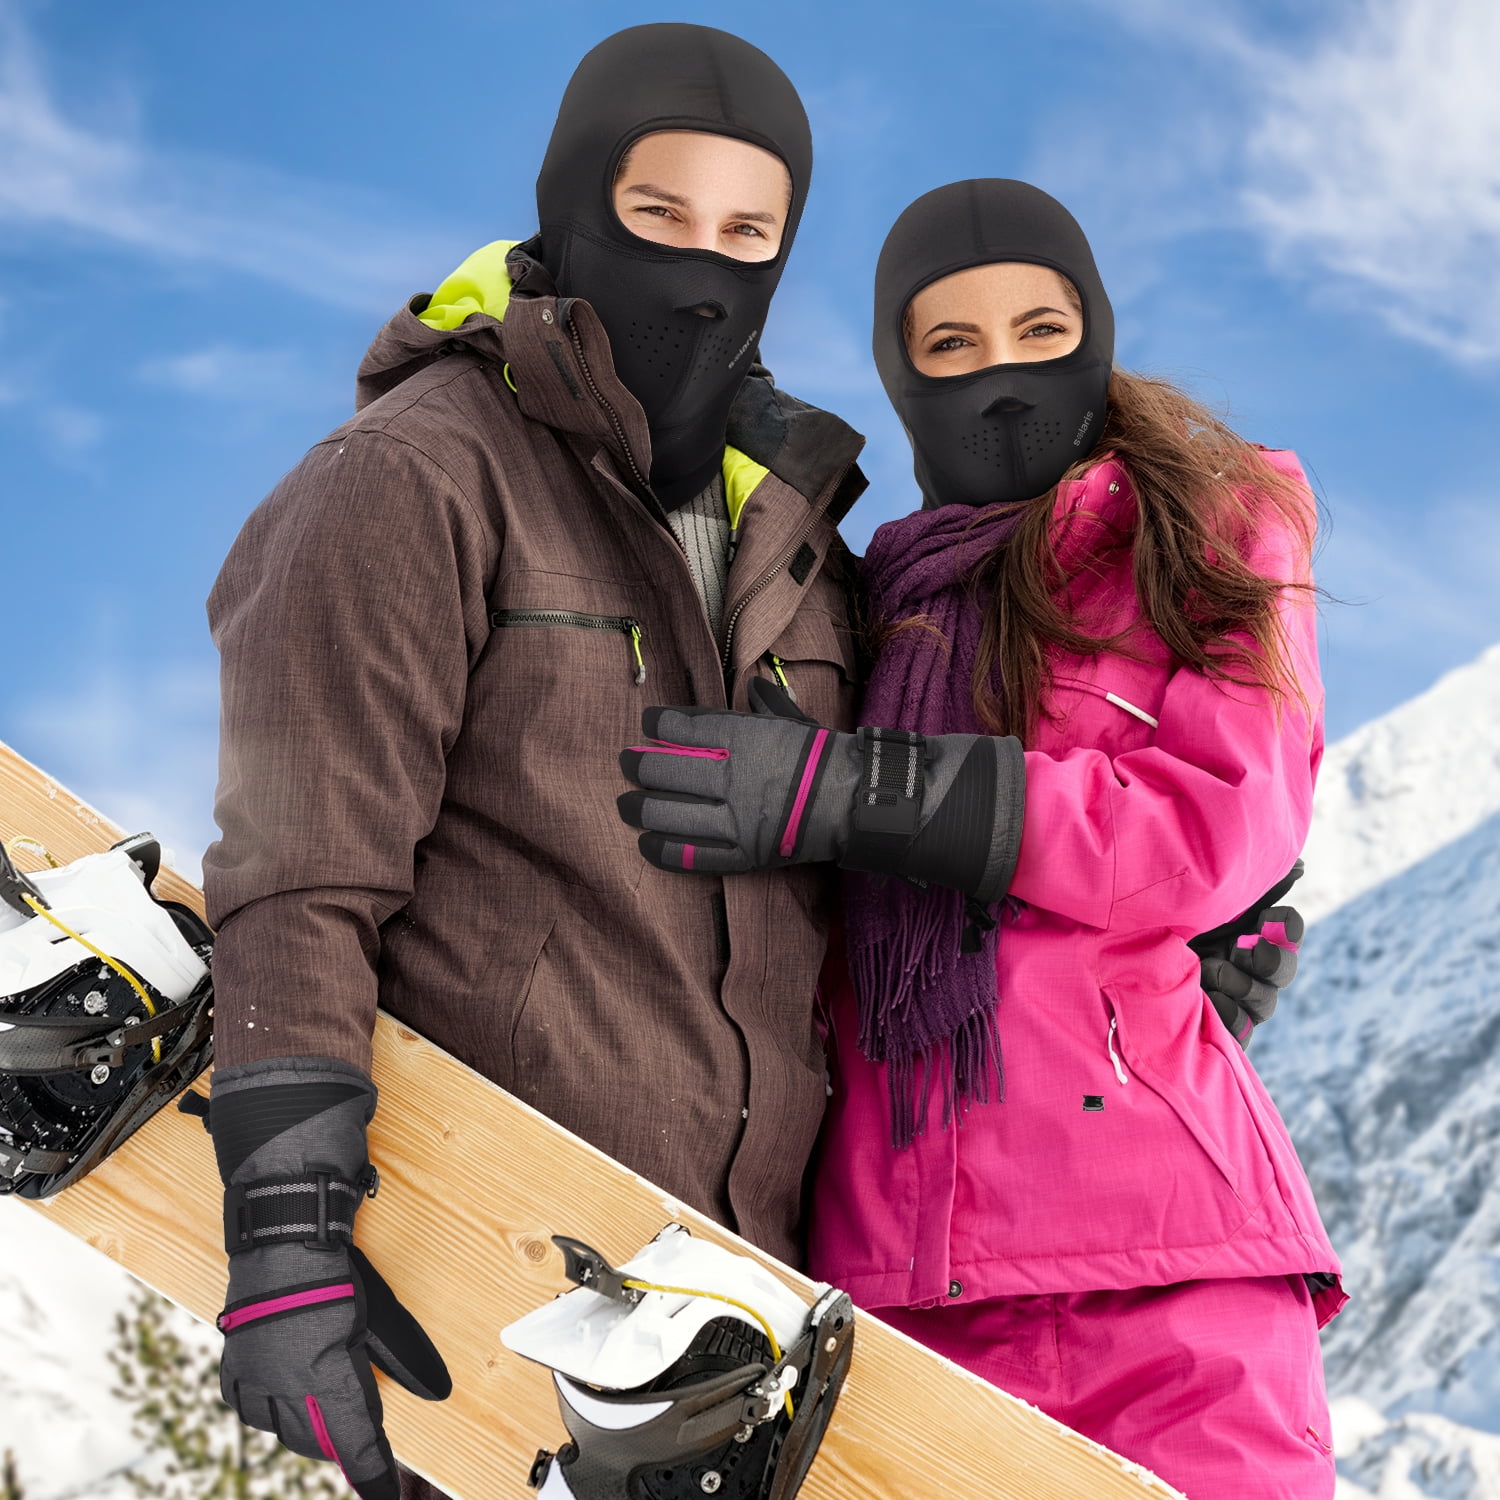 Winter Gloves Ski Gloves Snow Gloves Warm Waterproof Windproof Anti-Slip Built-in Zipper Pocket for Skiing Snowboarding Skating Shoveling Medium